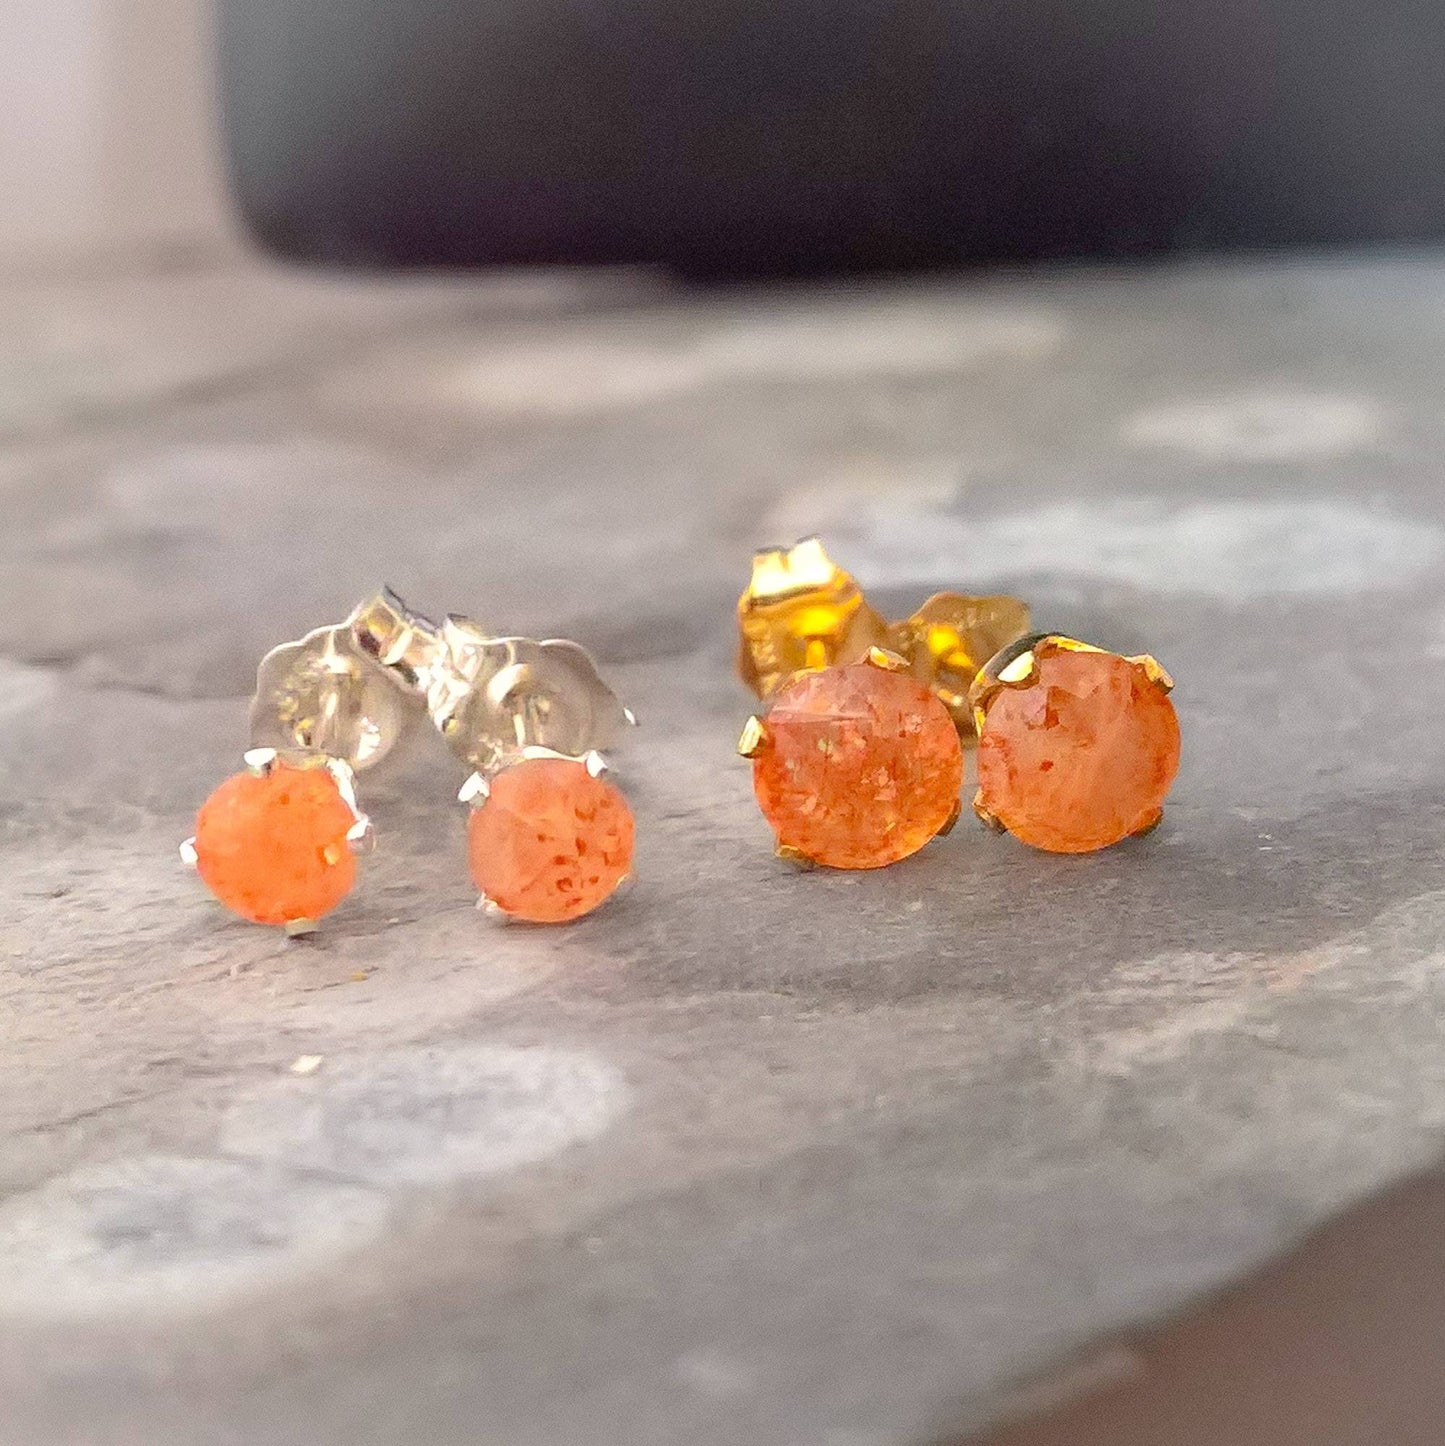 Sunstone gemstone stud earrings in sterling silver or gold filled